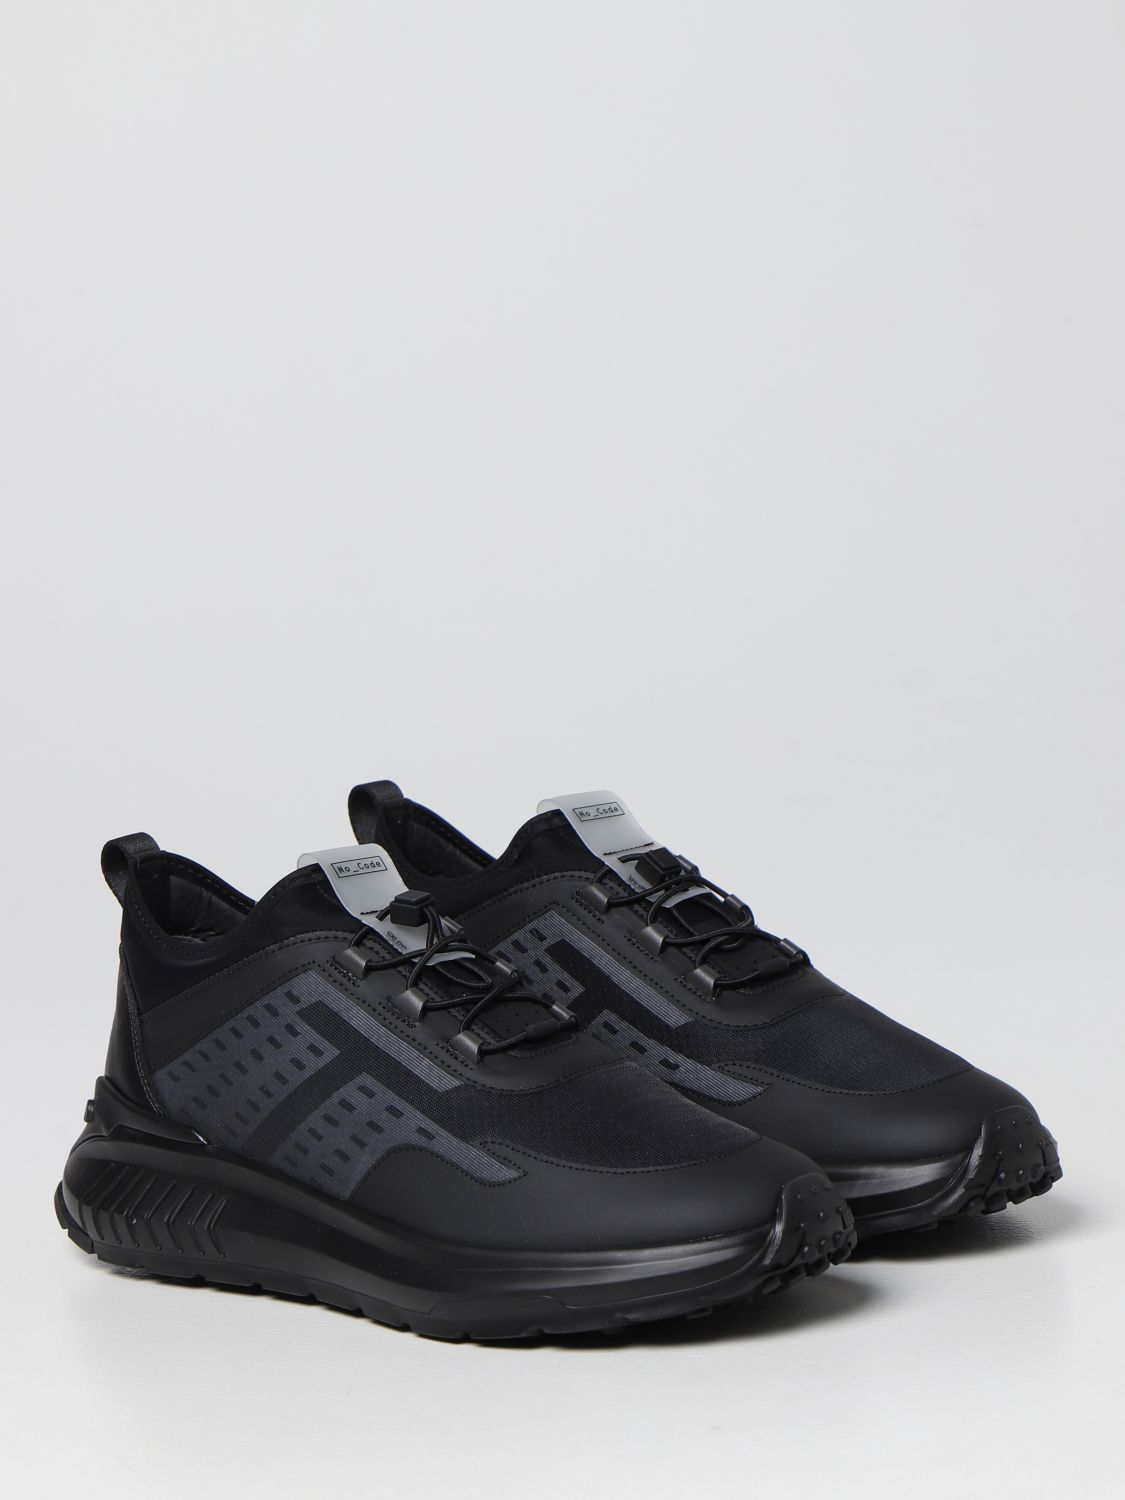 Sneakers Tod's: Sneakers No_Code J Tod's in tessuto tecnico e pelle nero 2